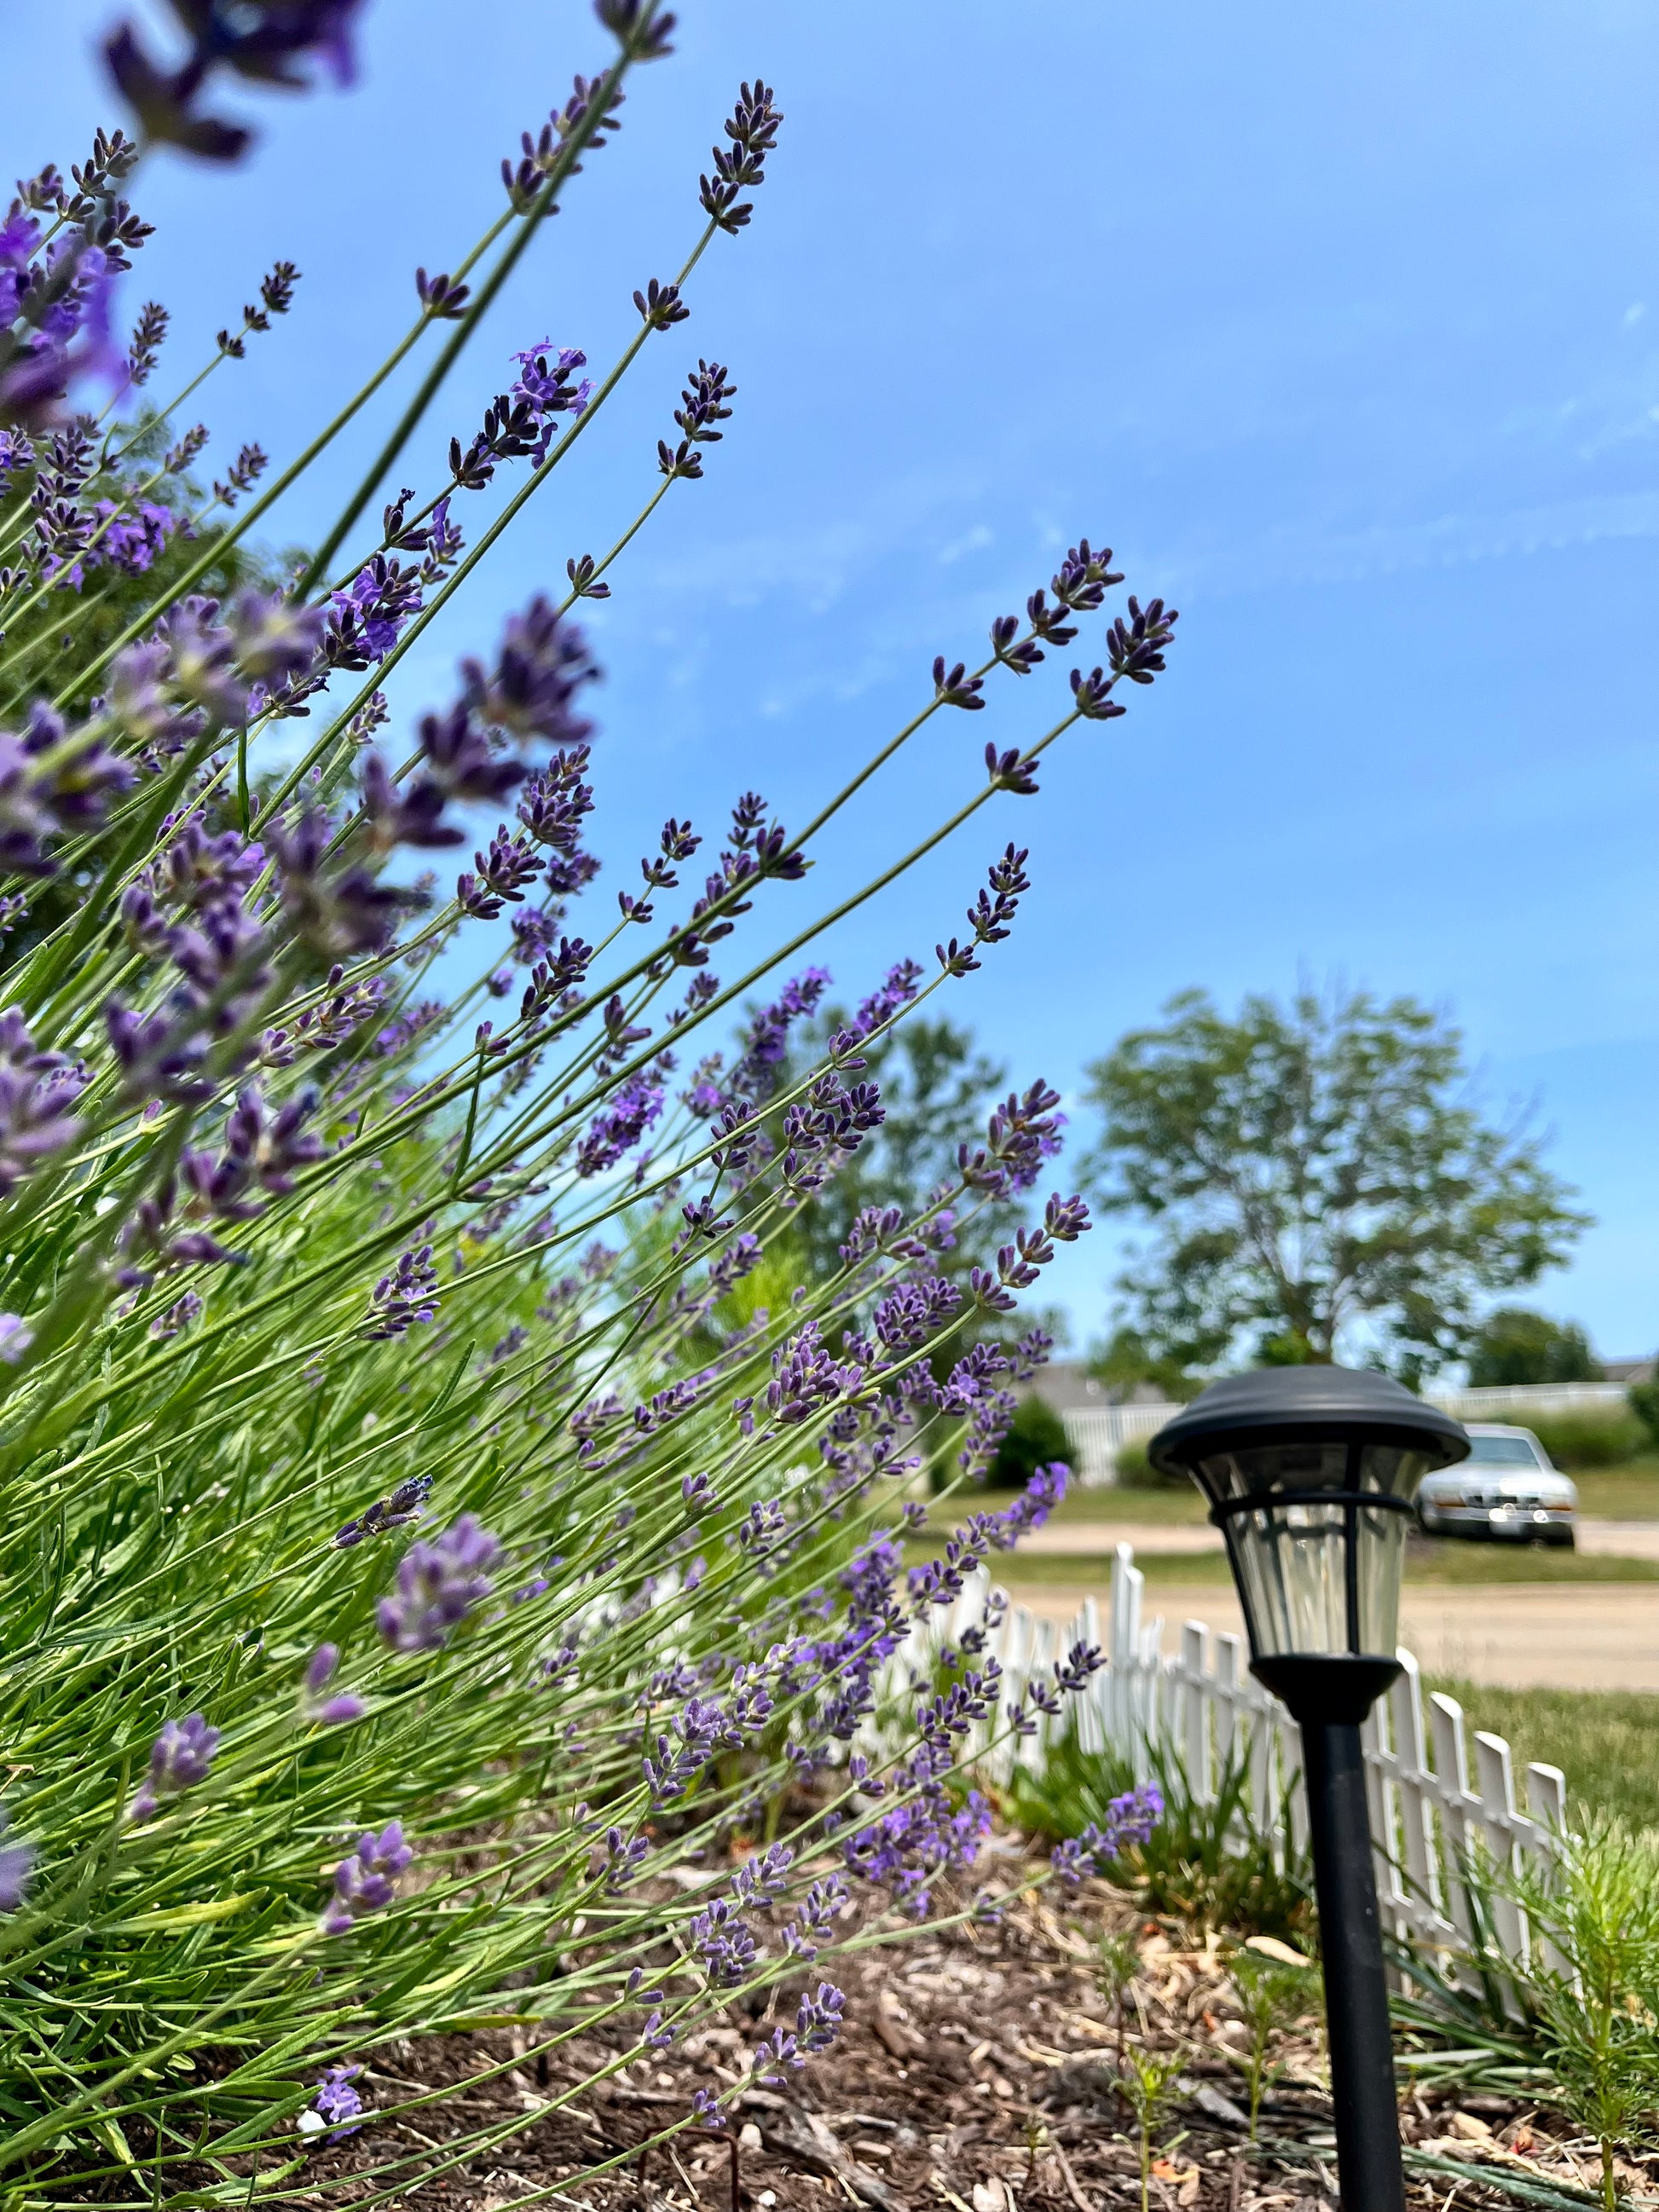 How to grow lavender 2023 - An expert shares their advice